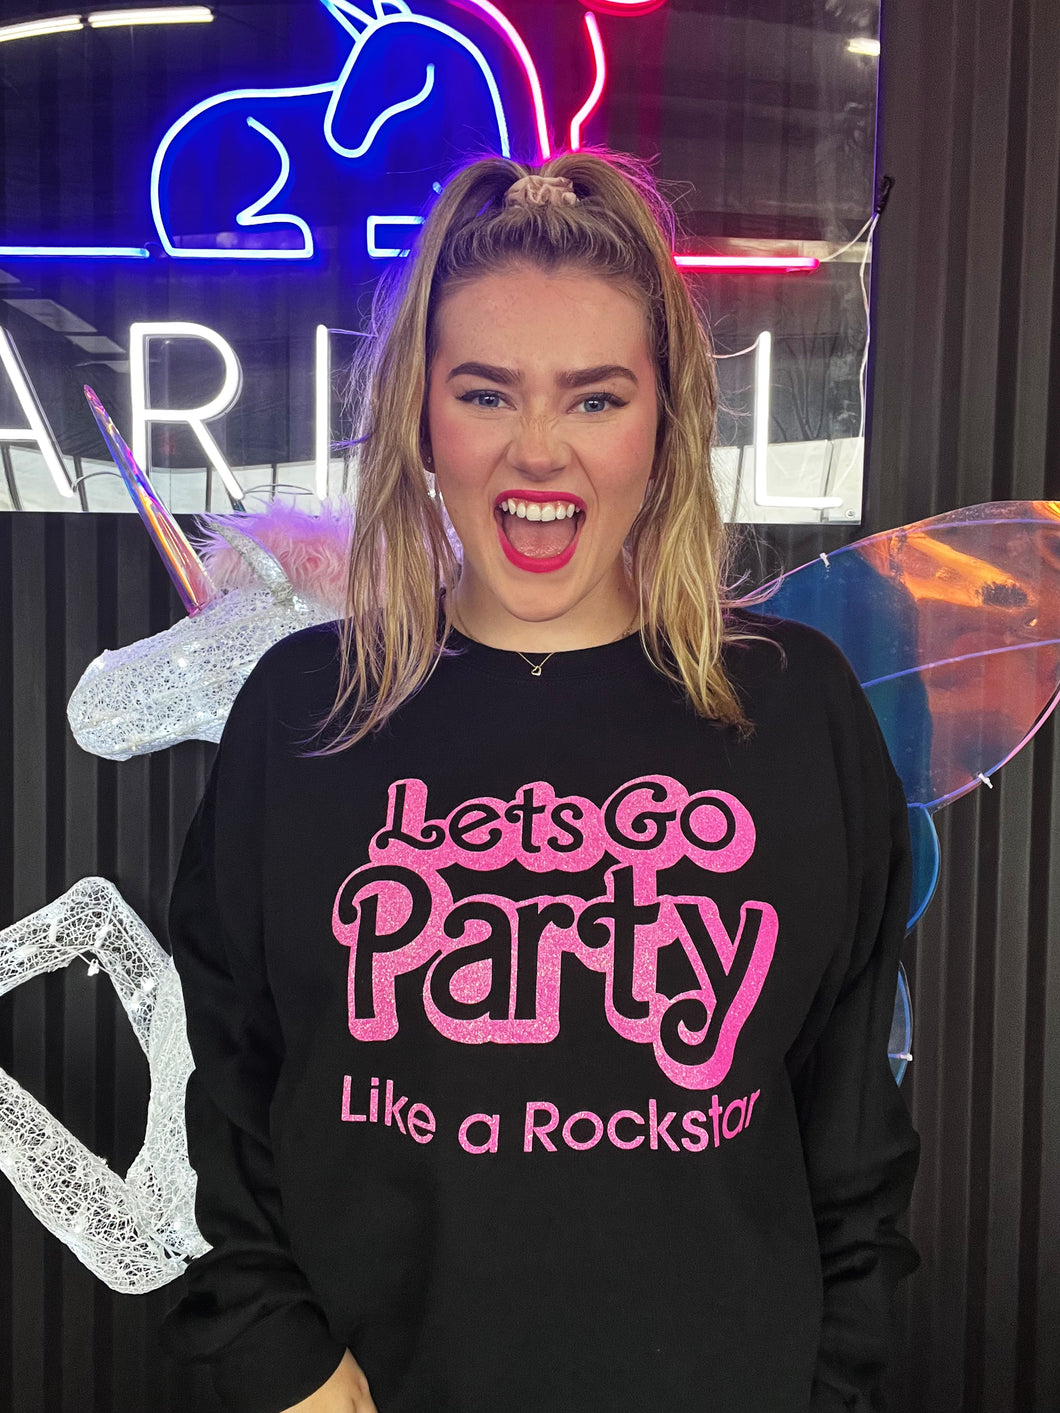 Let’s Go Party Sweatshirt!